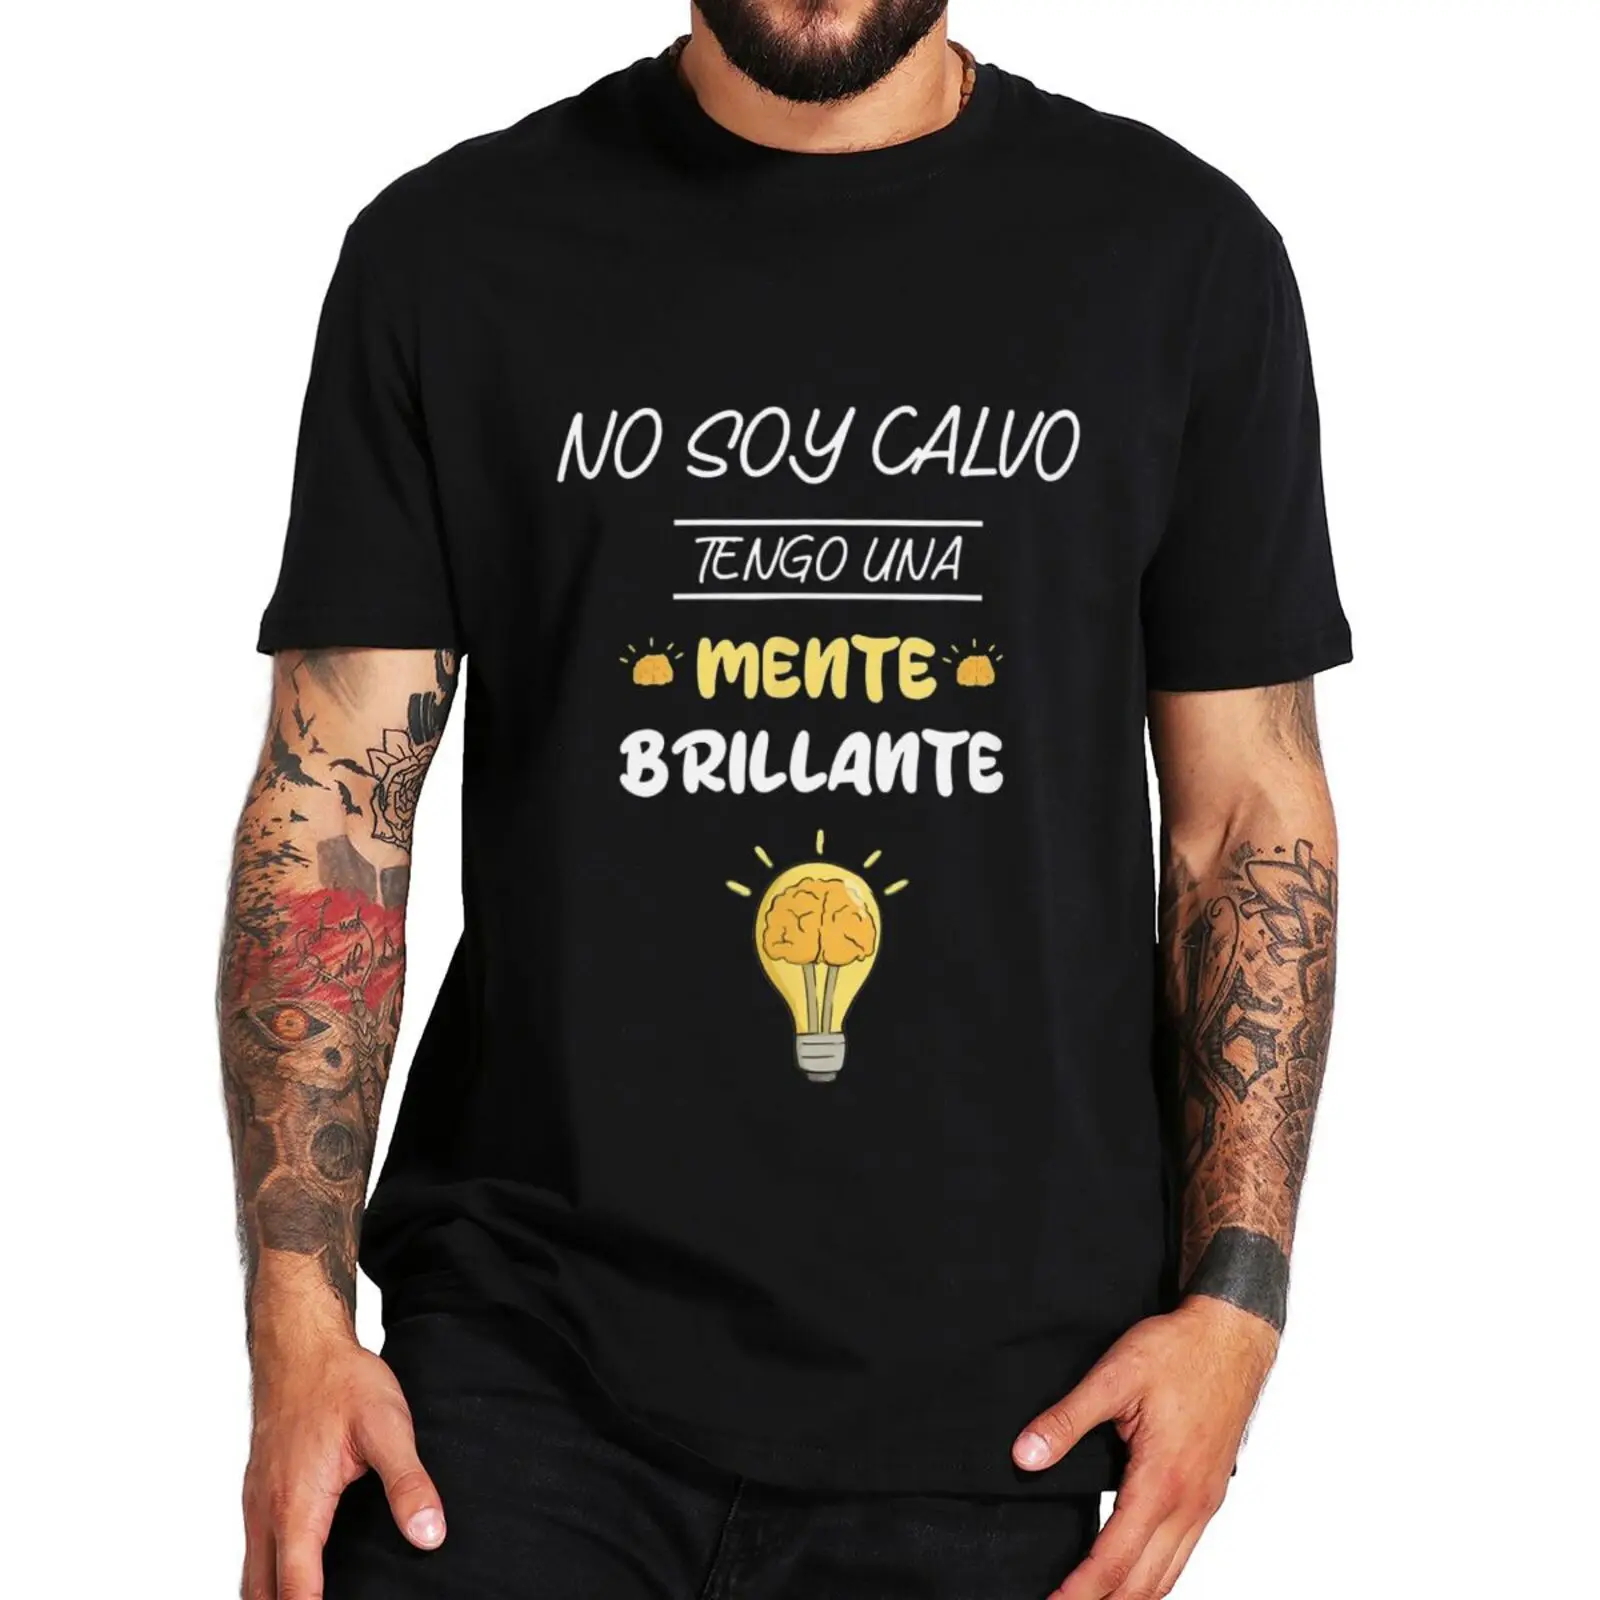 

I'm Not Bald I Have A Smart T Shirt Funny Spanish Text Humor Joke Men Clothing Summer Cotton Unisex Soft Casual T-shirt EU Size